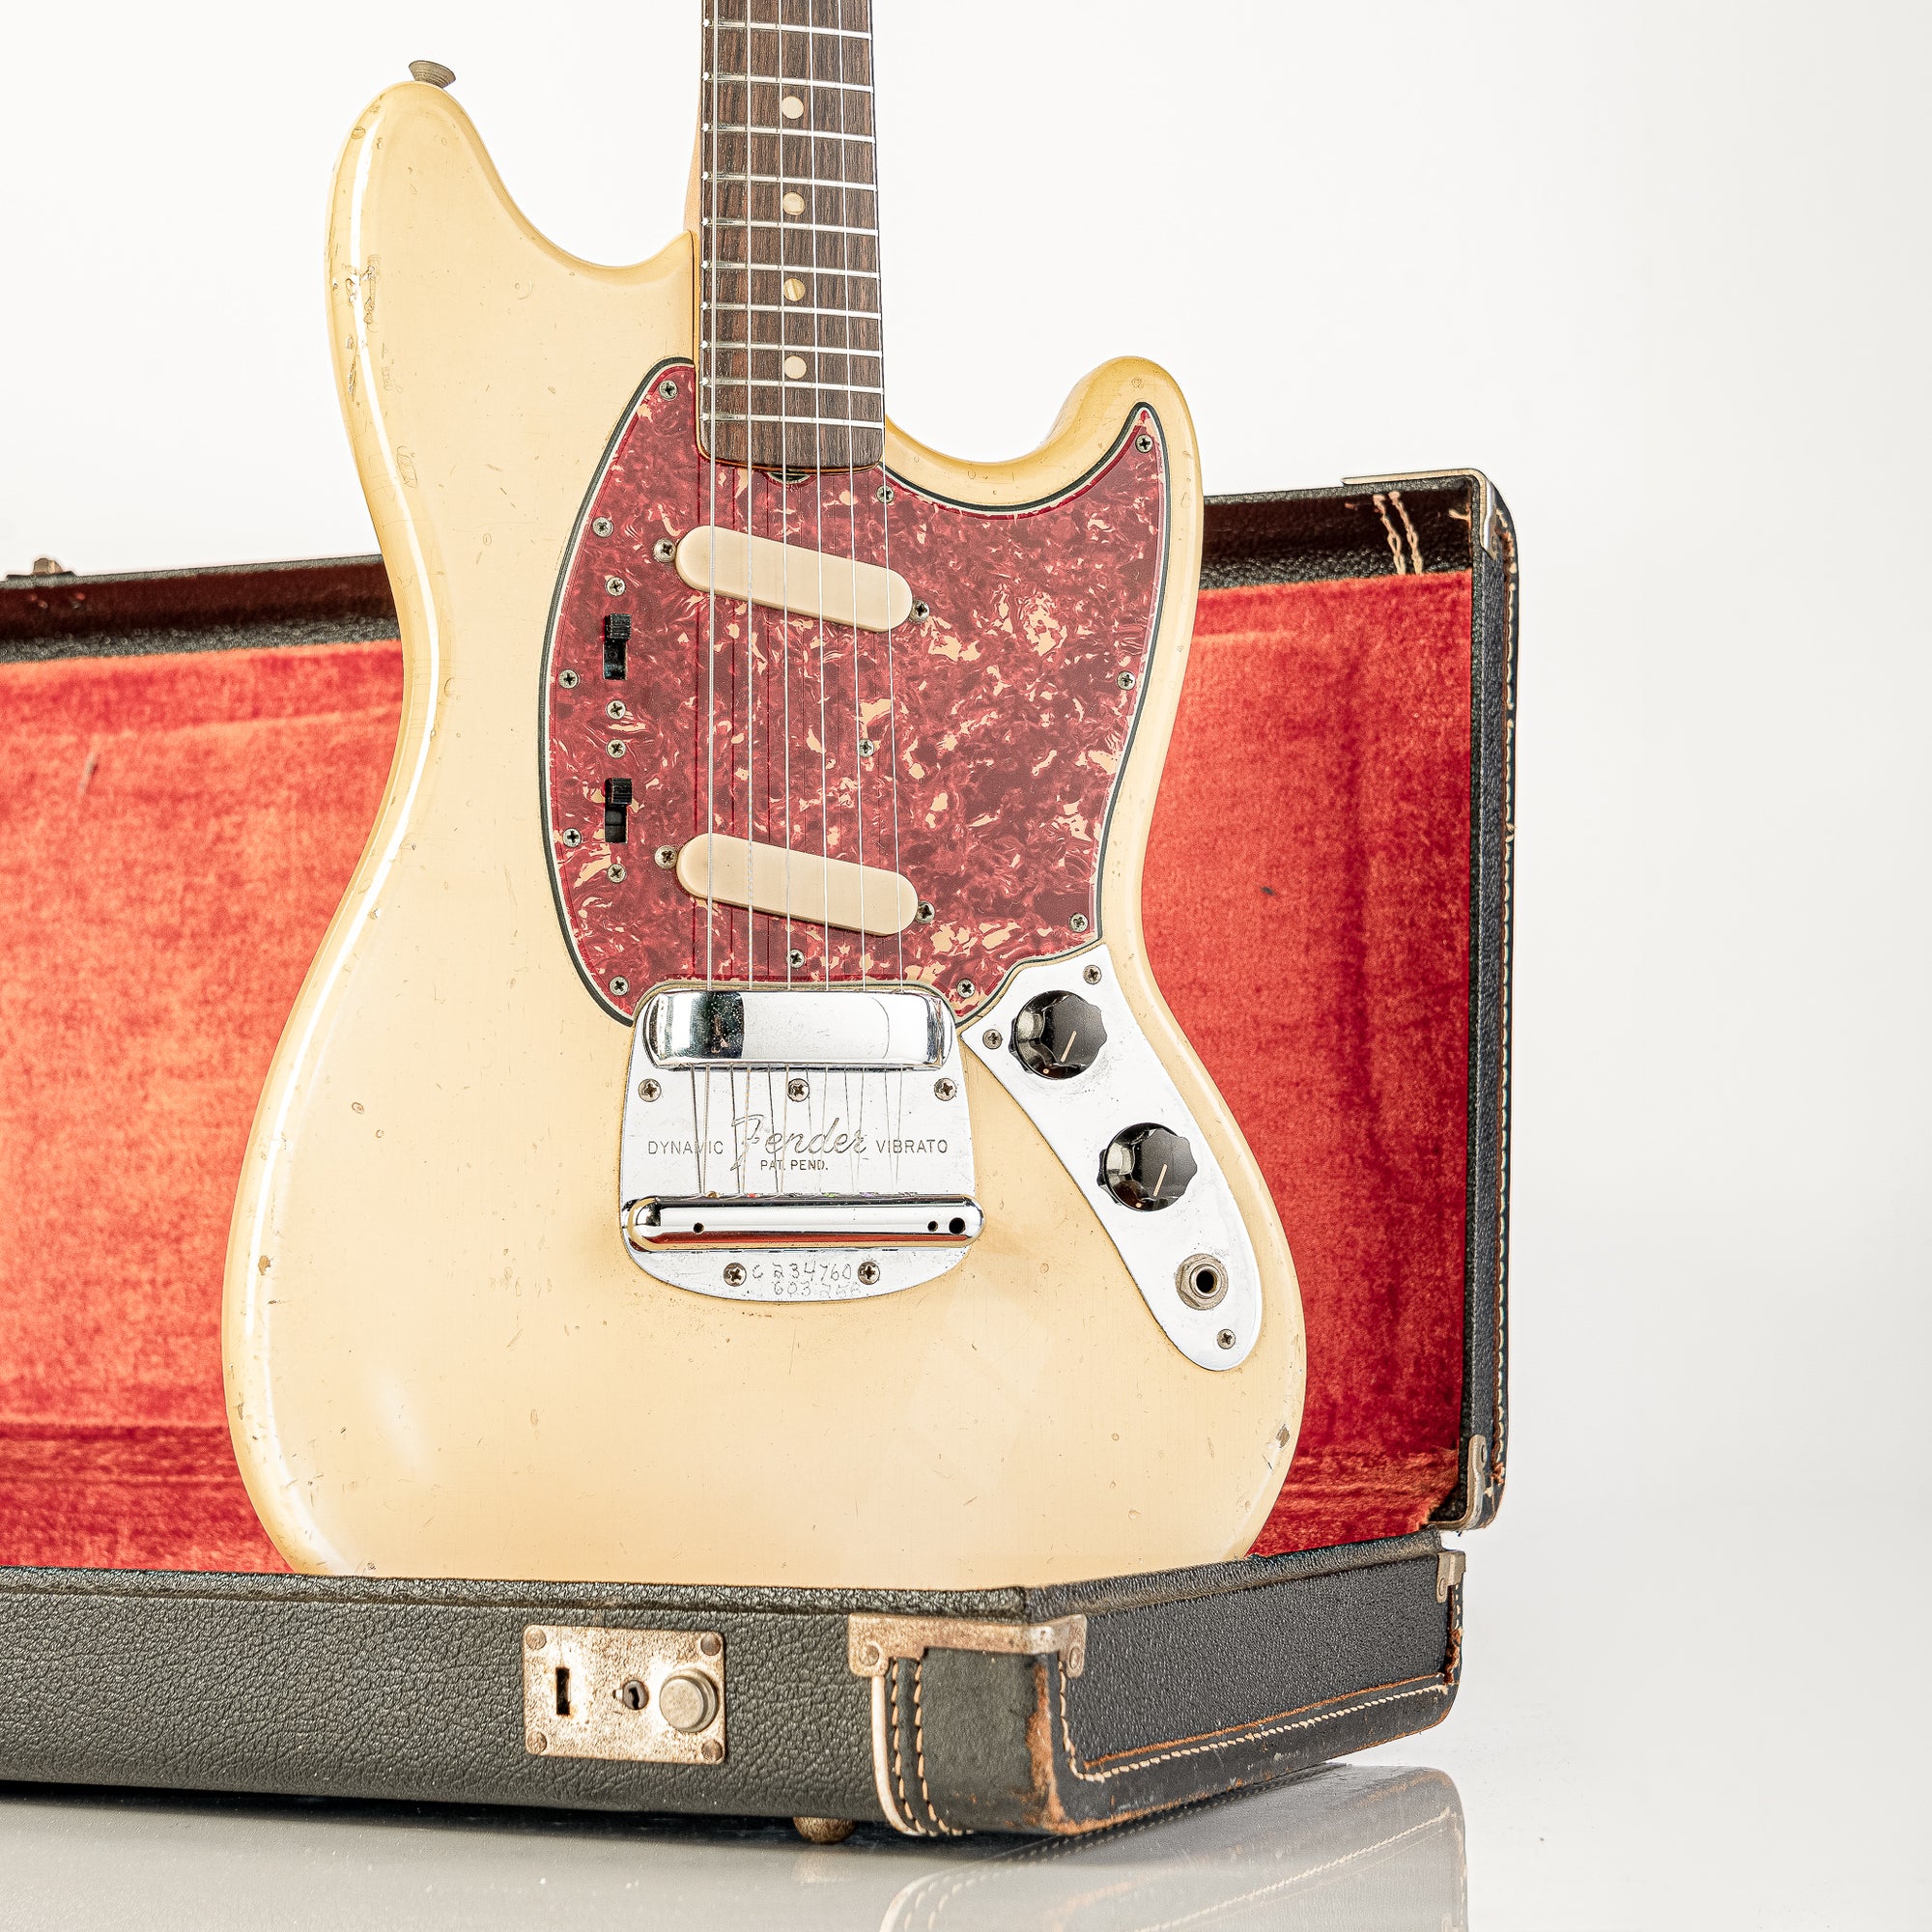 Vintage Fender Mustang 1965-1966 Electric Guitar- White with Original Hardshell Case